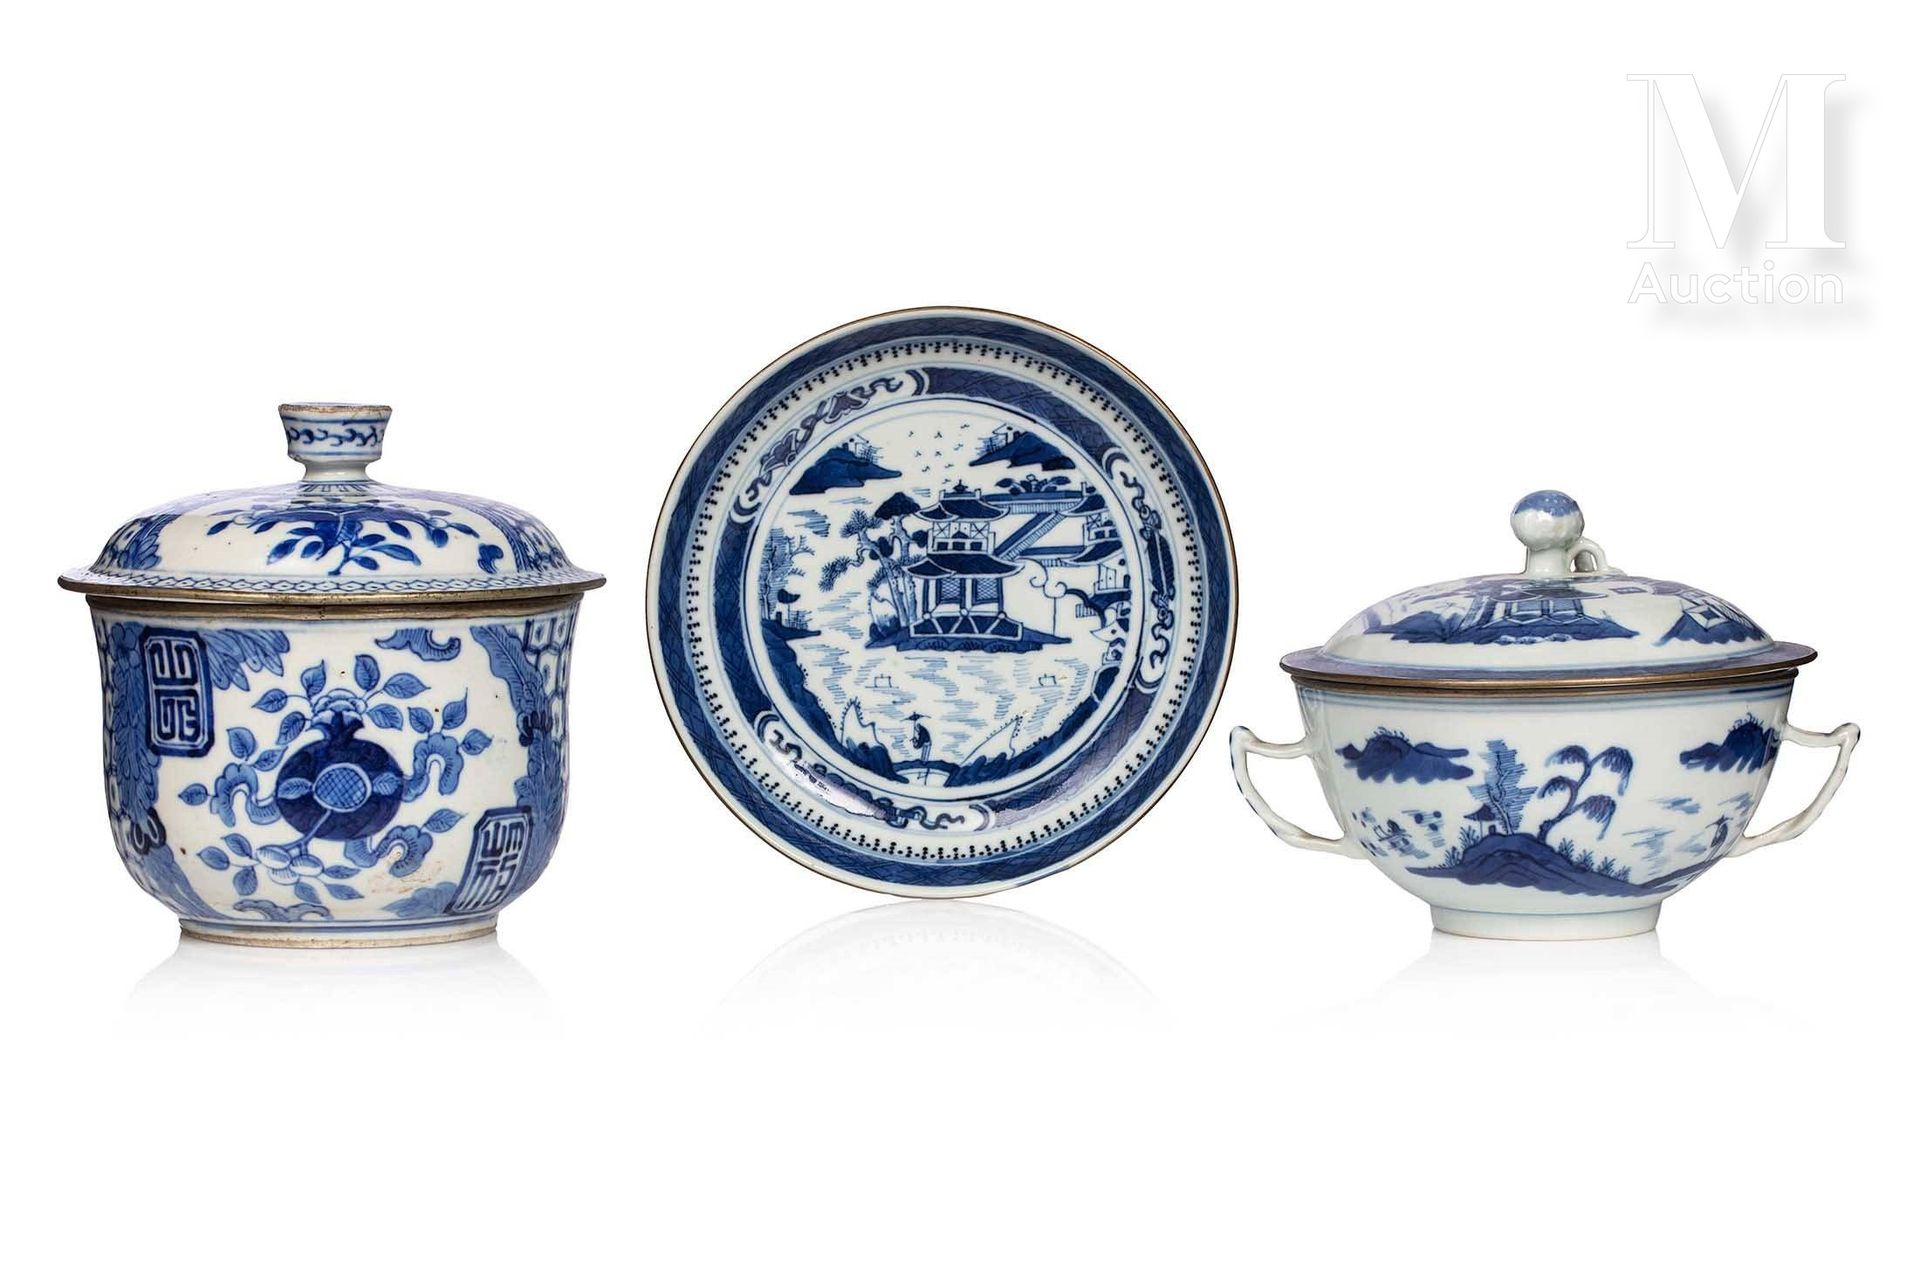 VIETNAM, XIXe siècle, Pot couvert en porcelaine "Bleu de Hué" 包括一个汤锅和一个蓝白装饰的印度公司&hellip;